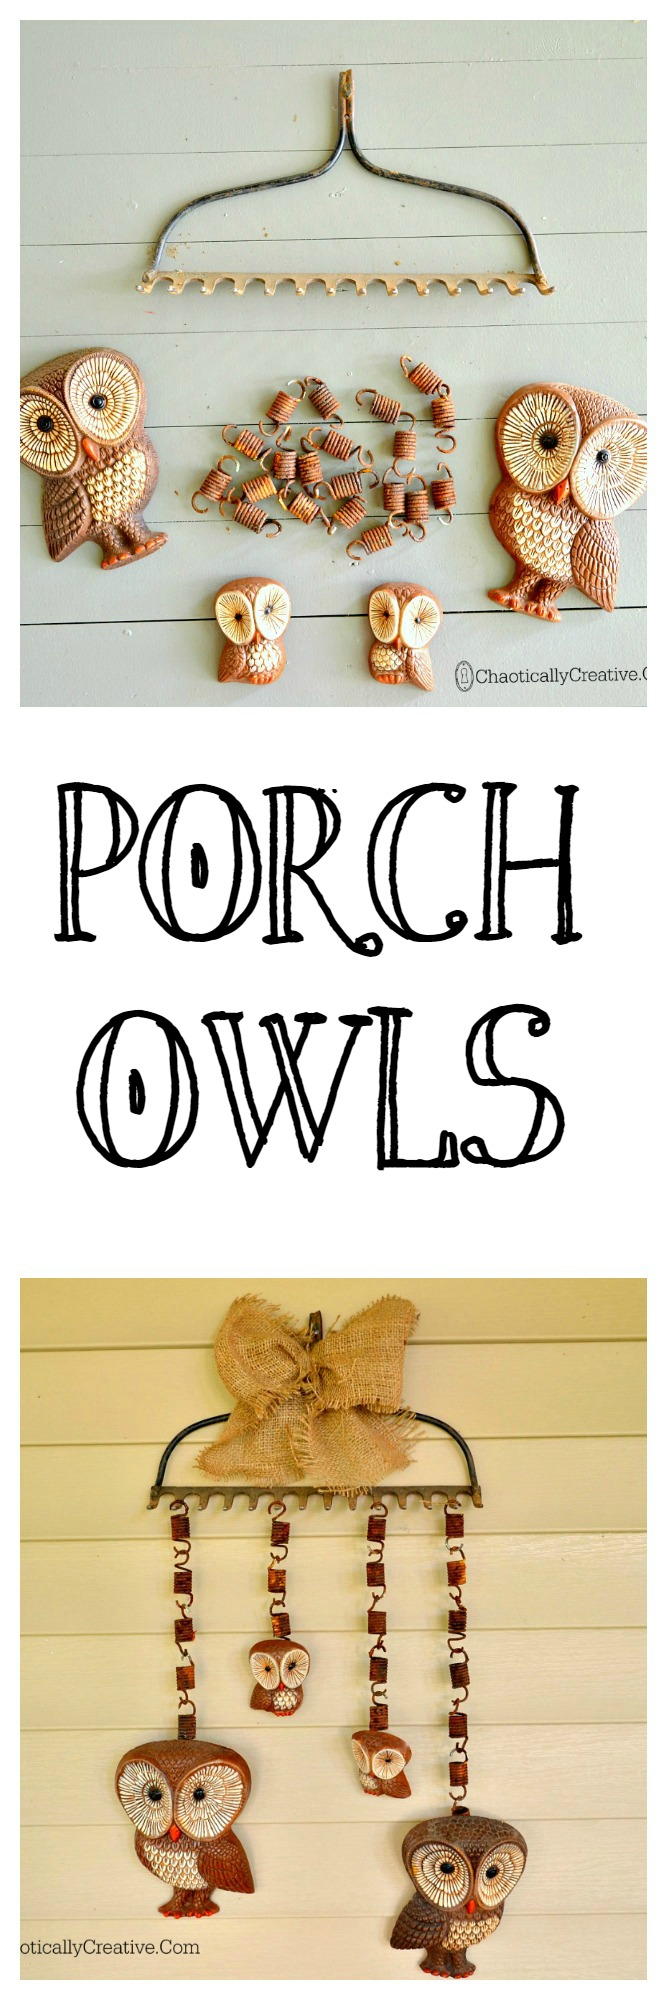 Porch Owls 12